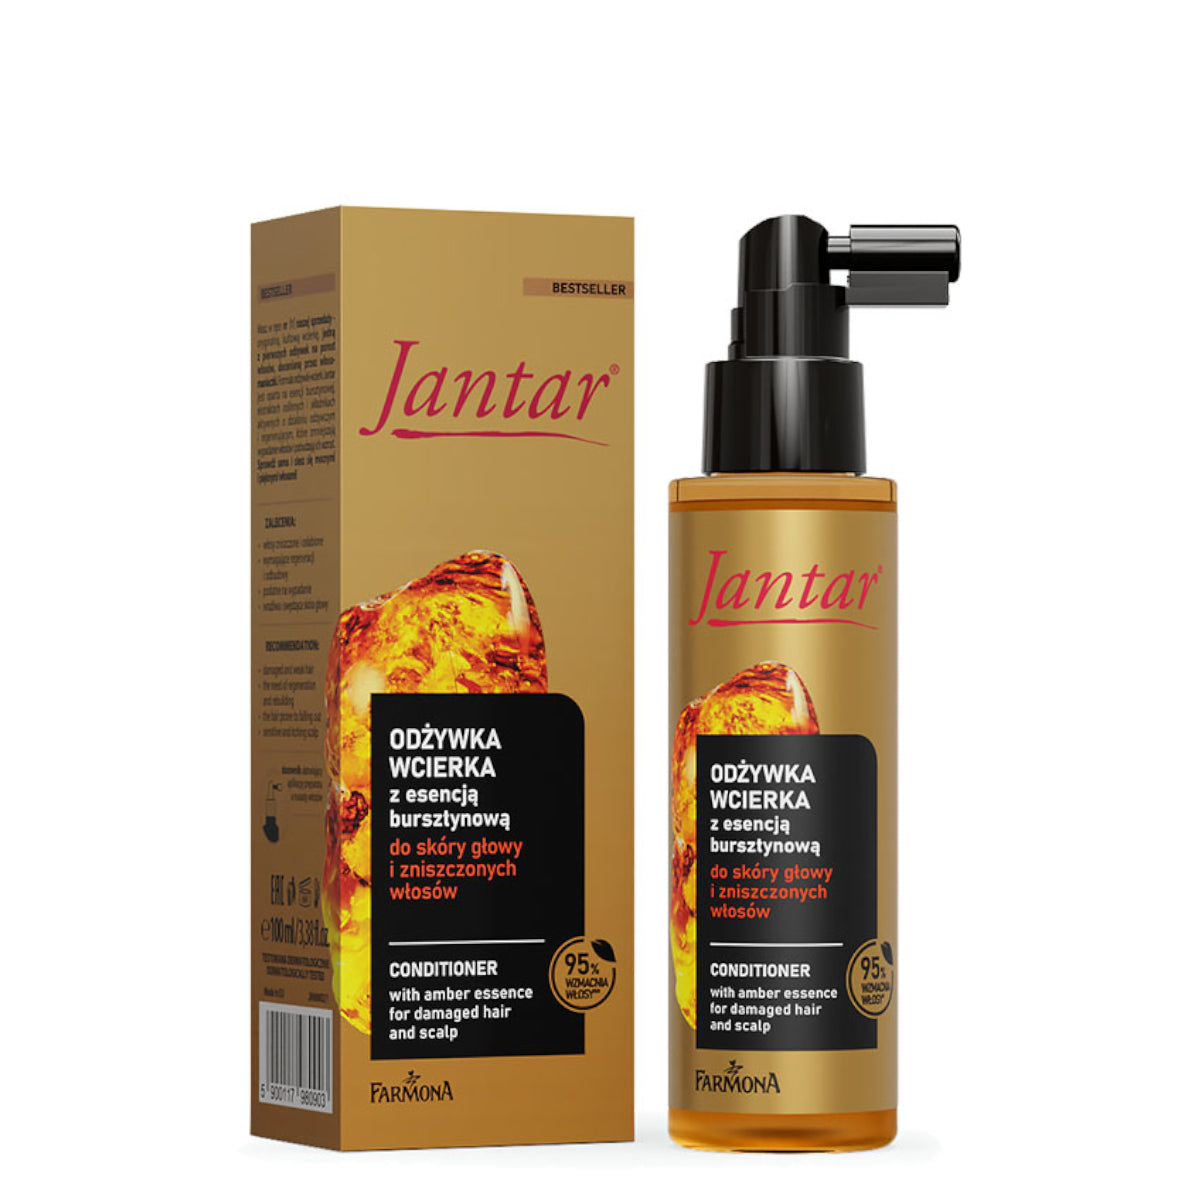 Farmona Jantar Conditioner in Spray Hair & Scalp Lotion Amber Essence